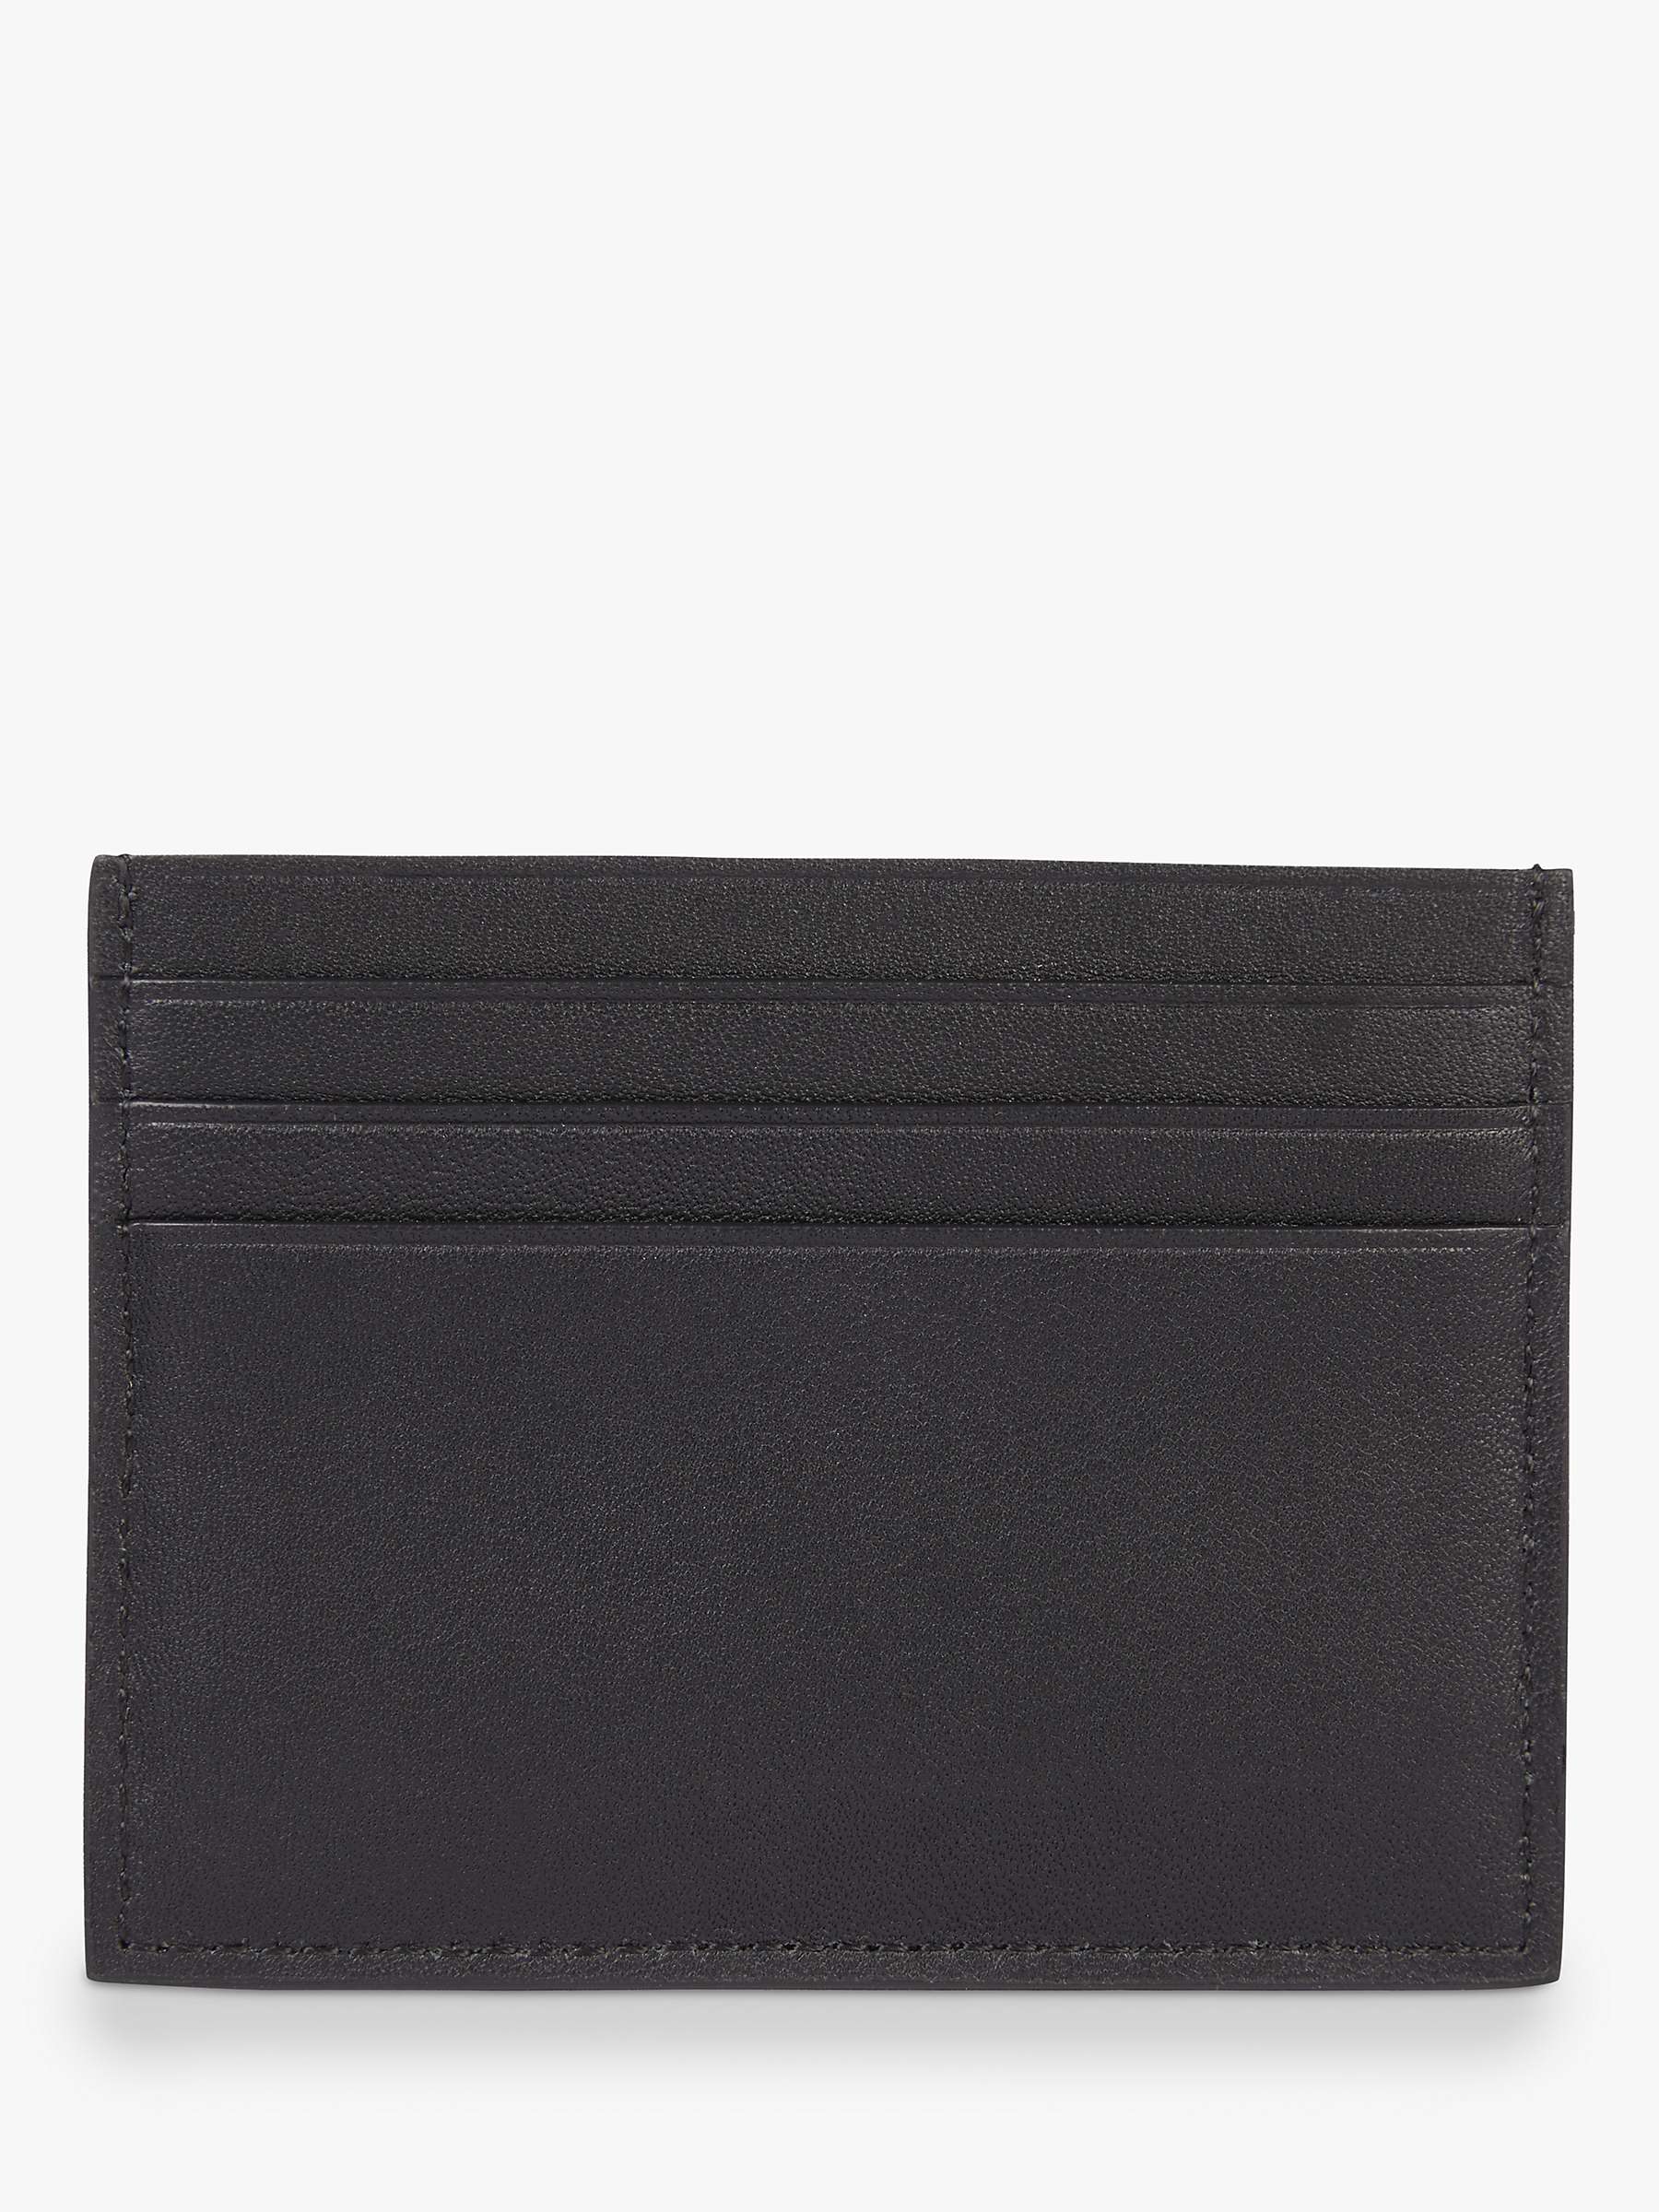 Calvin Klein Slim Leather Card Holder, Black at John Lewis & Partners